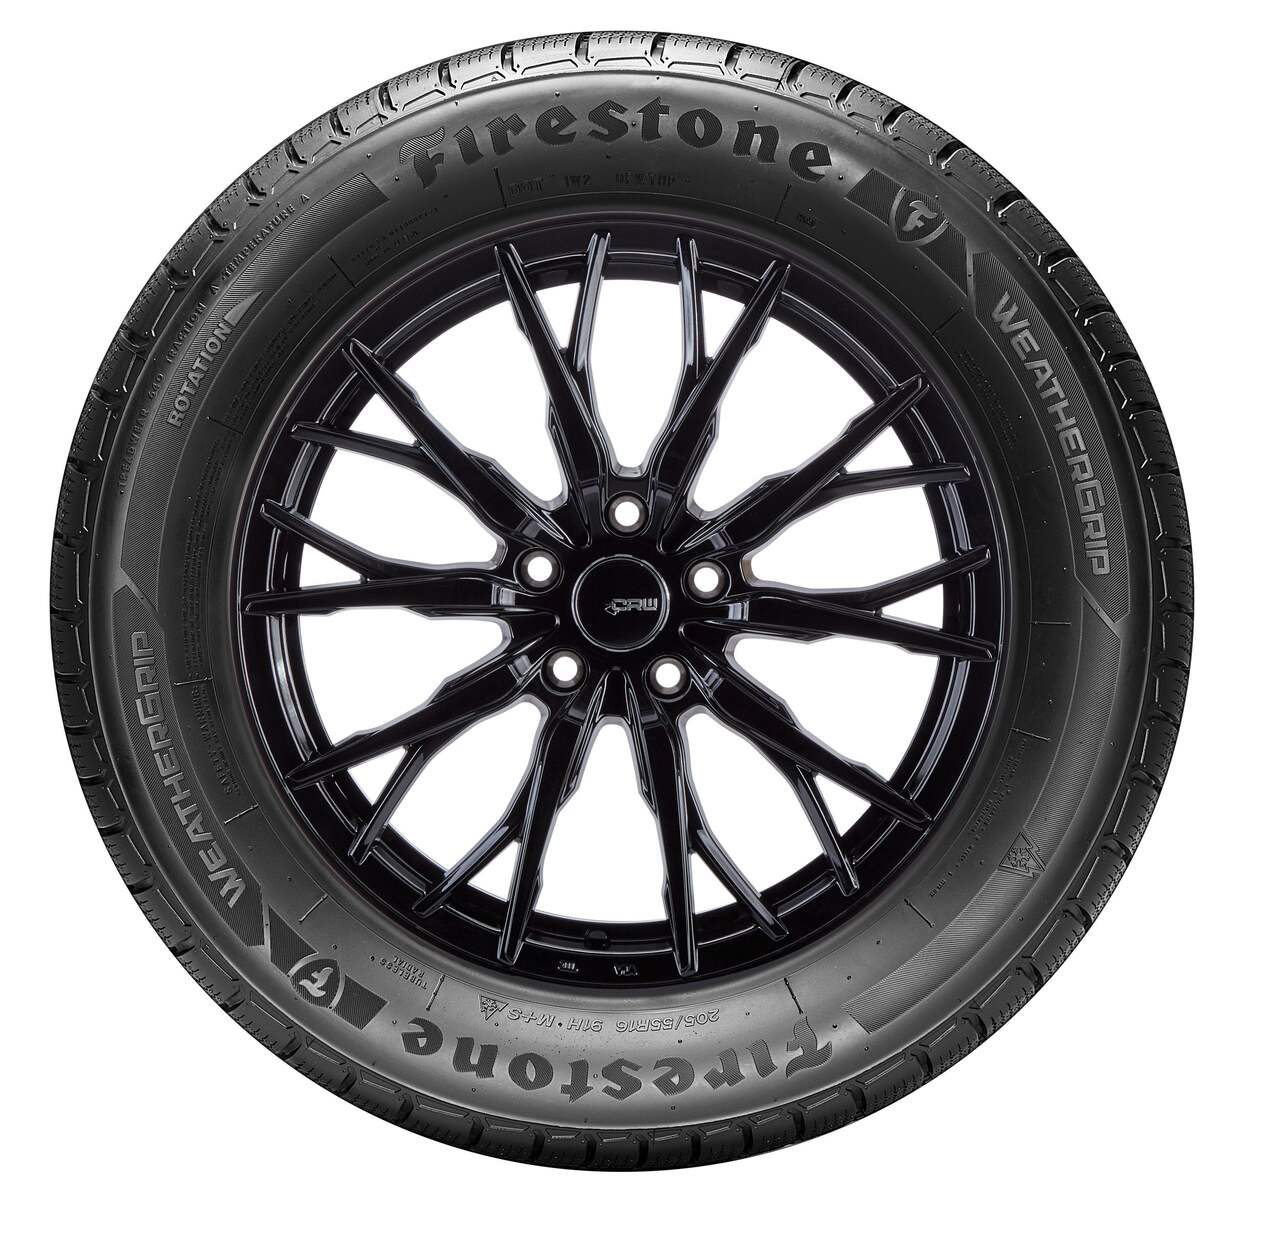 Firestone All Season Touring Tire 205/60R16 92 T